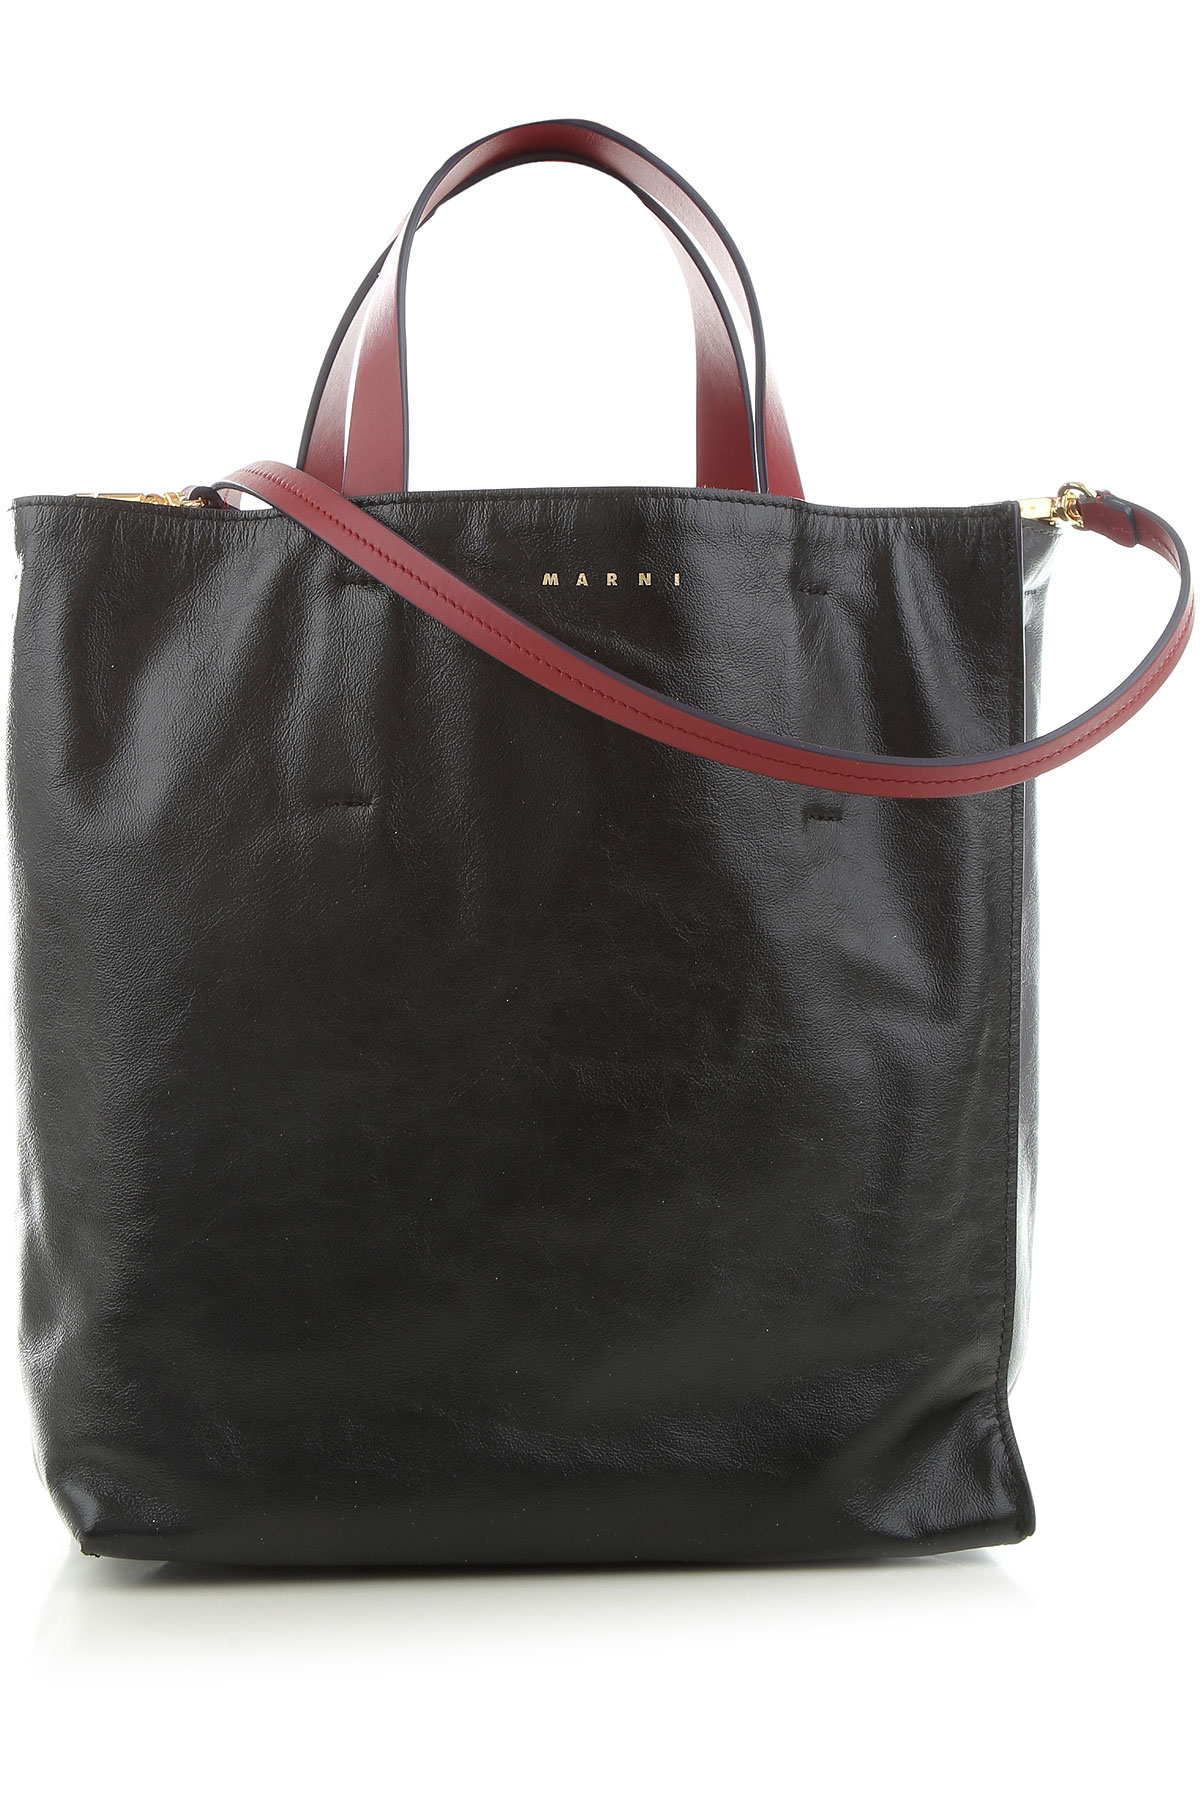 Handbags Marni, Style code: shmp0018u1-p2644-z2i33